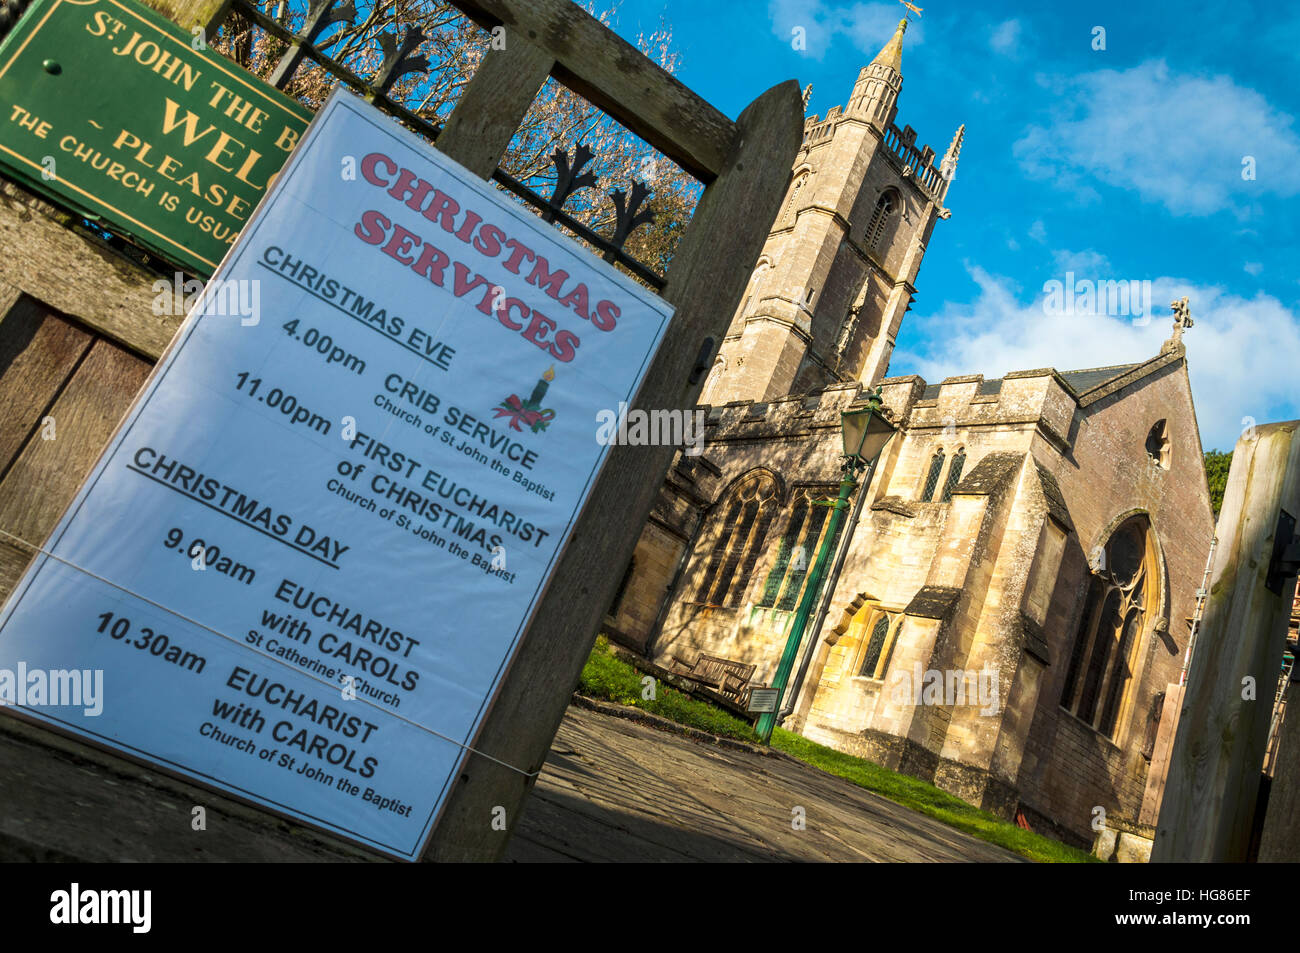 Christmas Services notice sign at St John the Baptist church in Batheaston, Somerset, UK Stock Photo